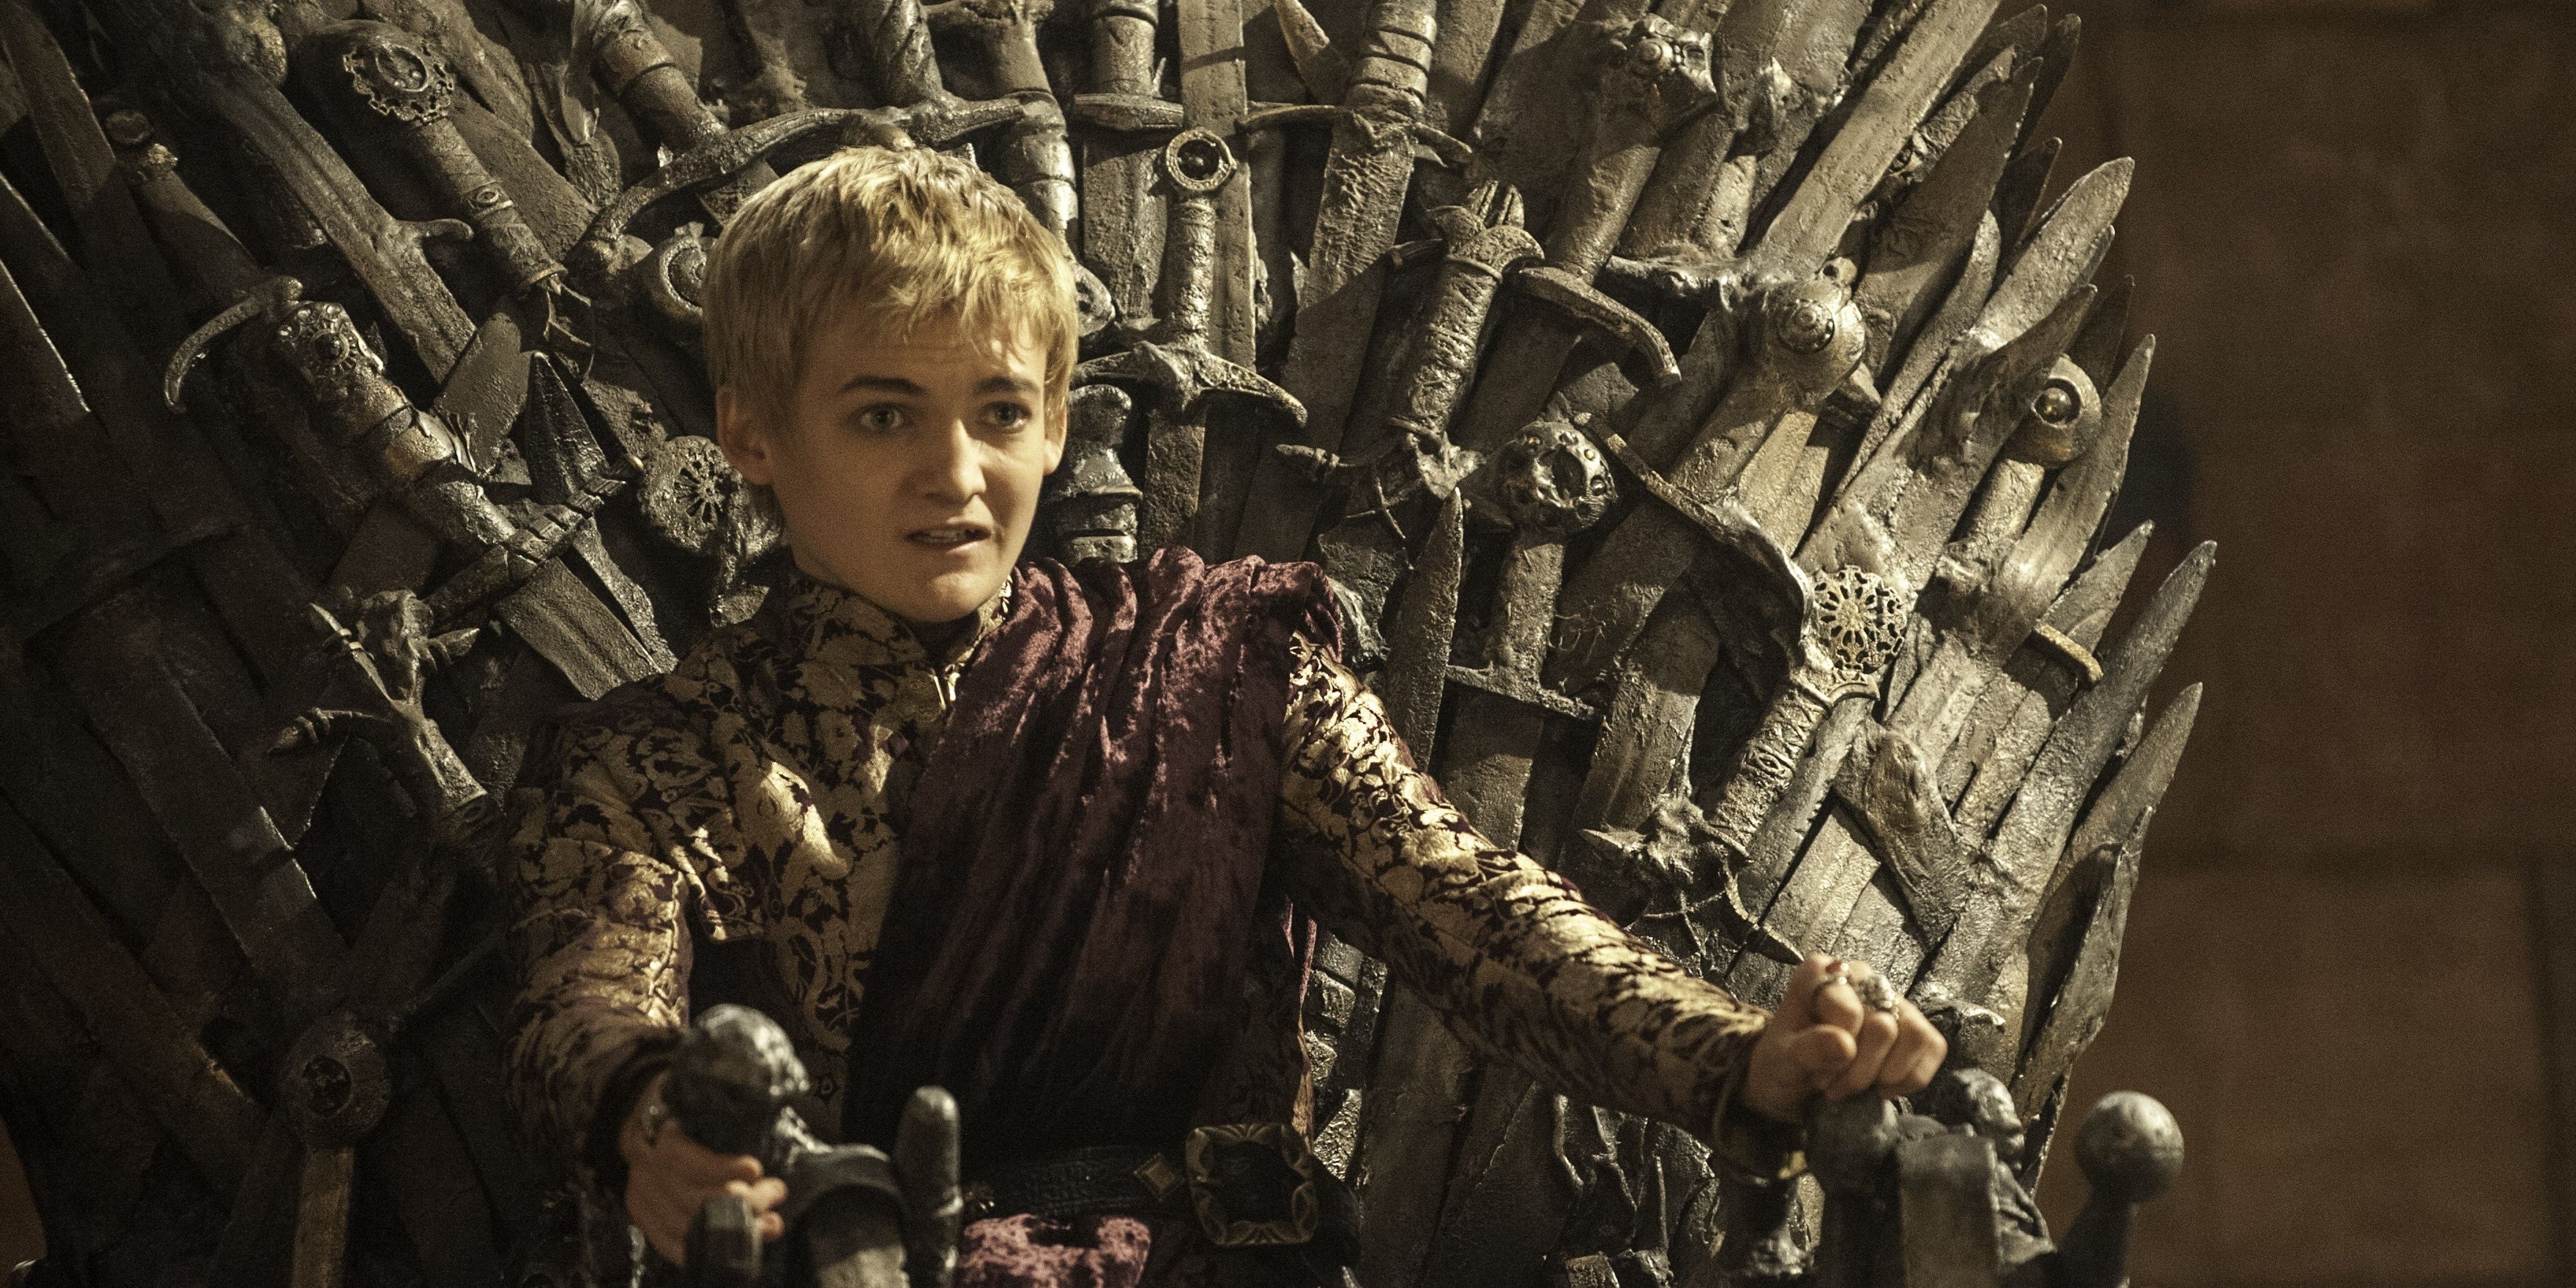 Jack Gleeson as Joffrey Baratheon in Game of Thrones sitting on the Iron Throne